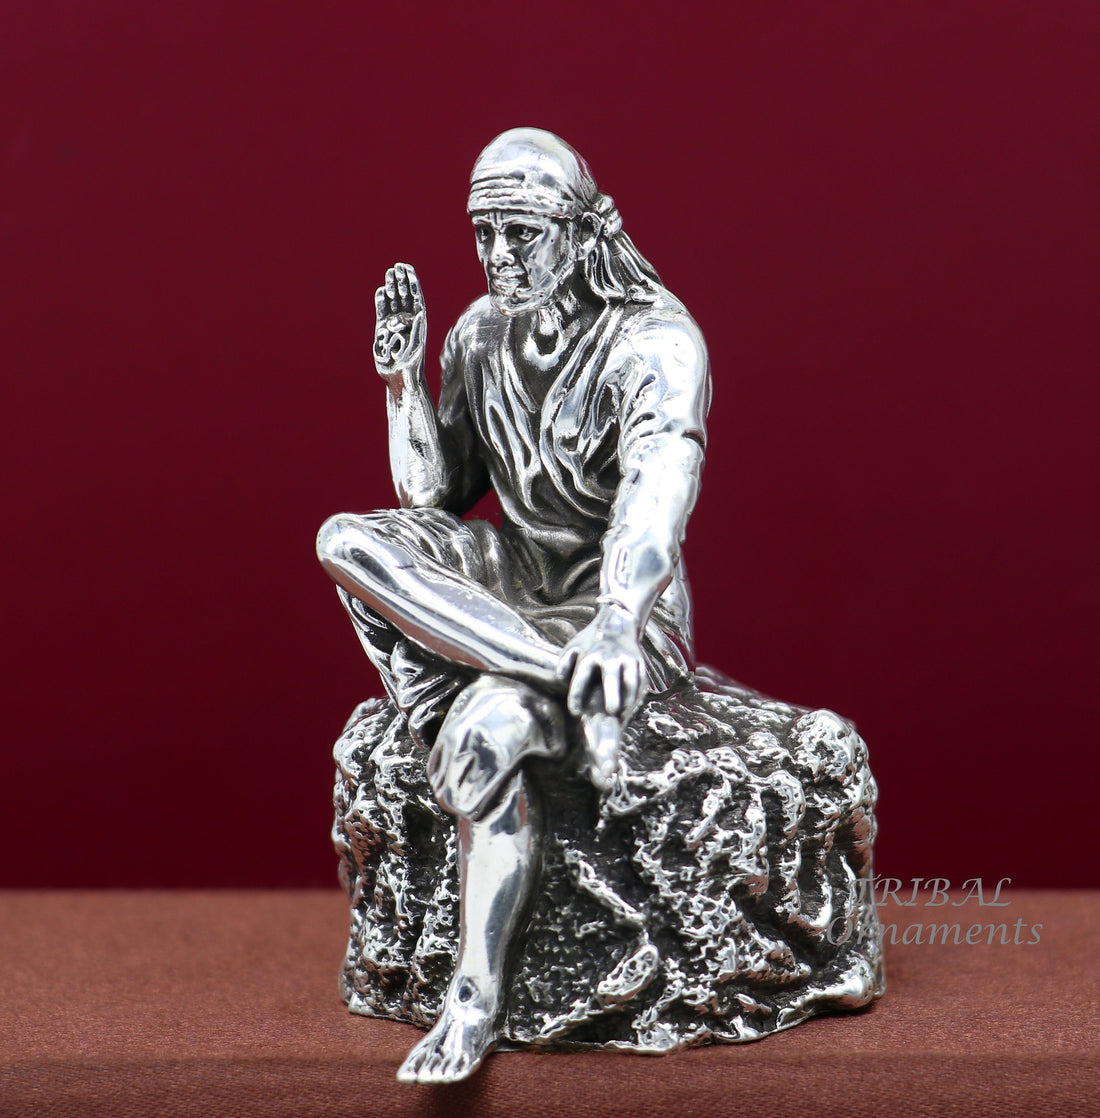 3" 925 sterling silver handmade Divine Hindu idol deity Sai Baba statue murti divine Statue Sculpture figurine puja article gifting art576 - TRIBAL ORNAMENTS